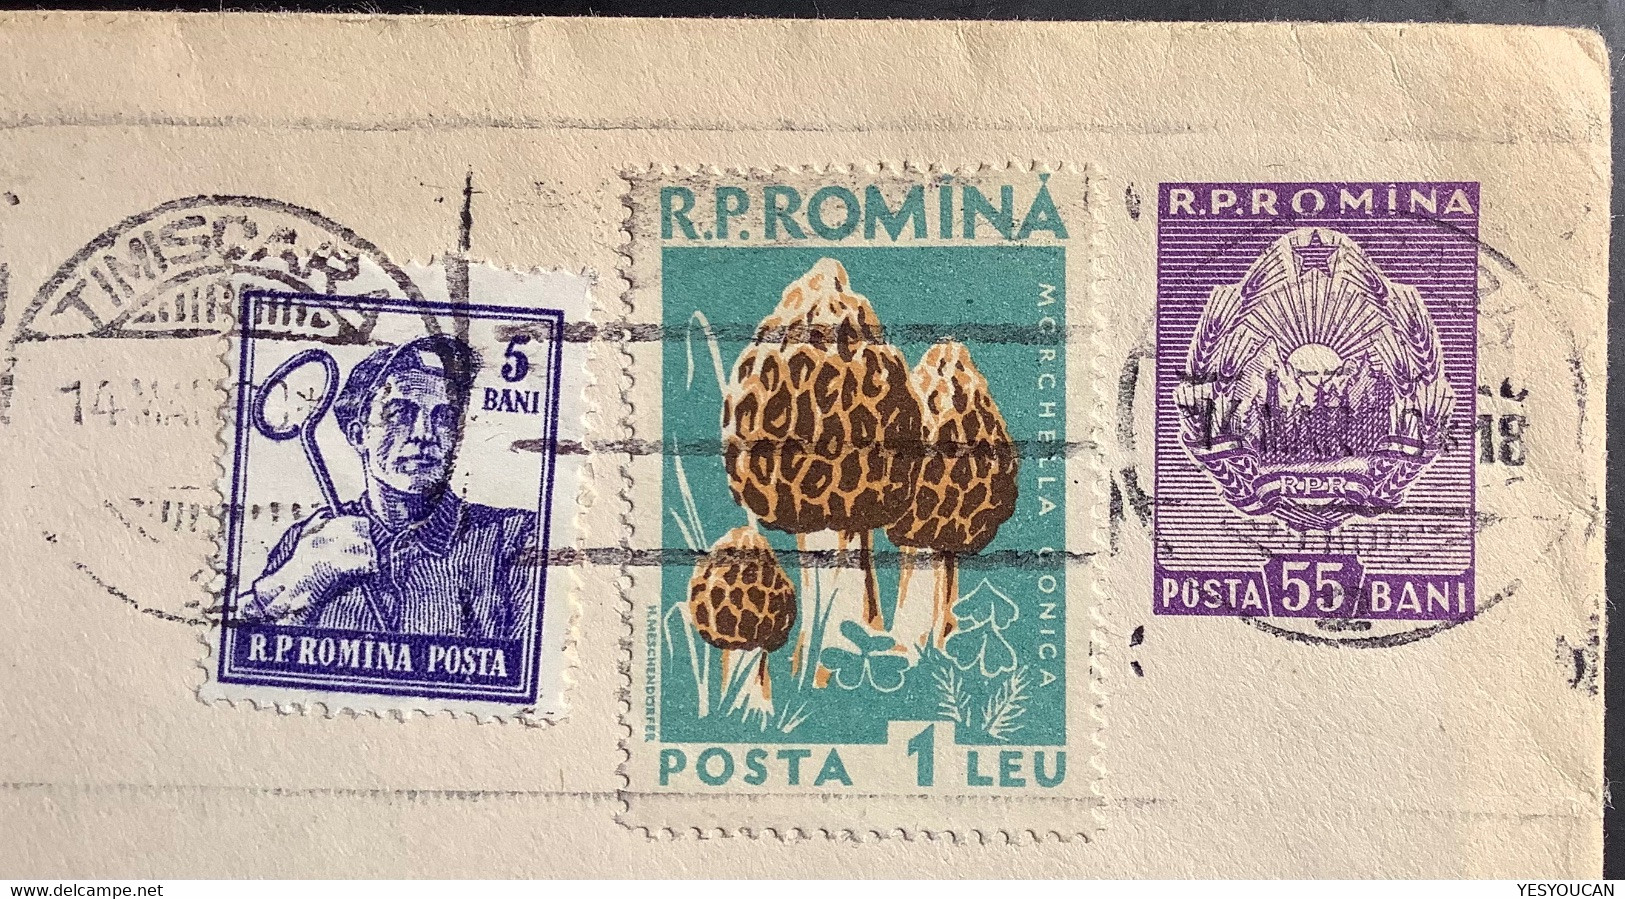 1960 Illustrated Postal Stationery: Plante Médicinale Medecine Plants Fleurs Flowers Mushroom Pilze (Romania Roumanie - Entiers Postaux